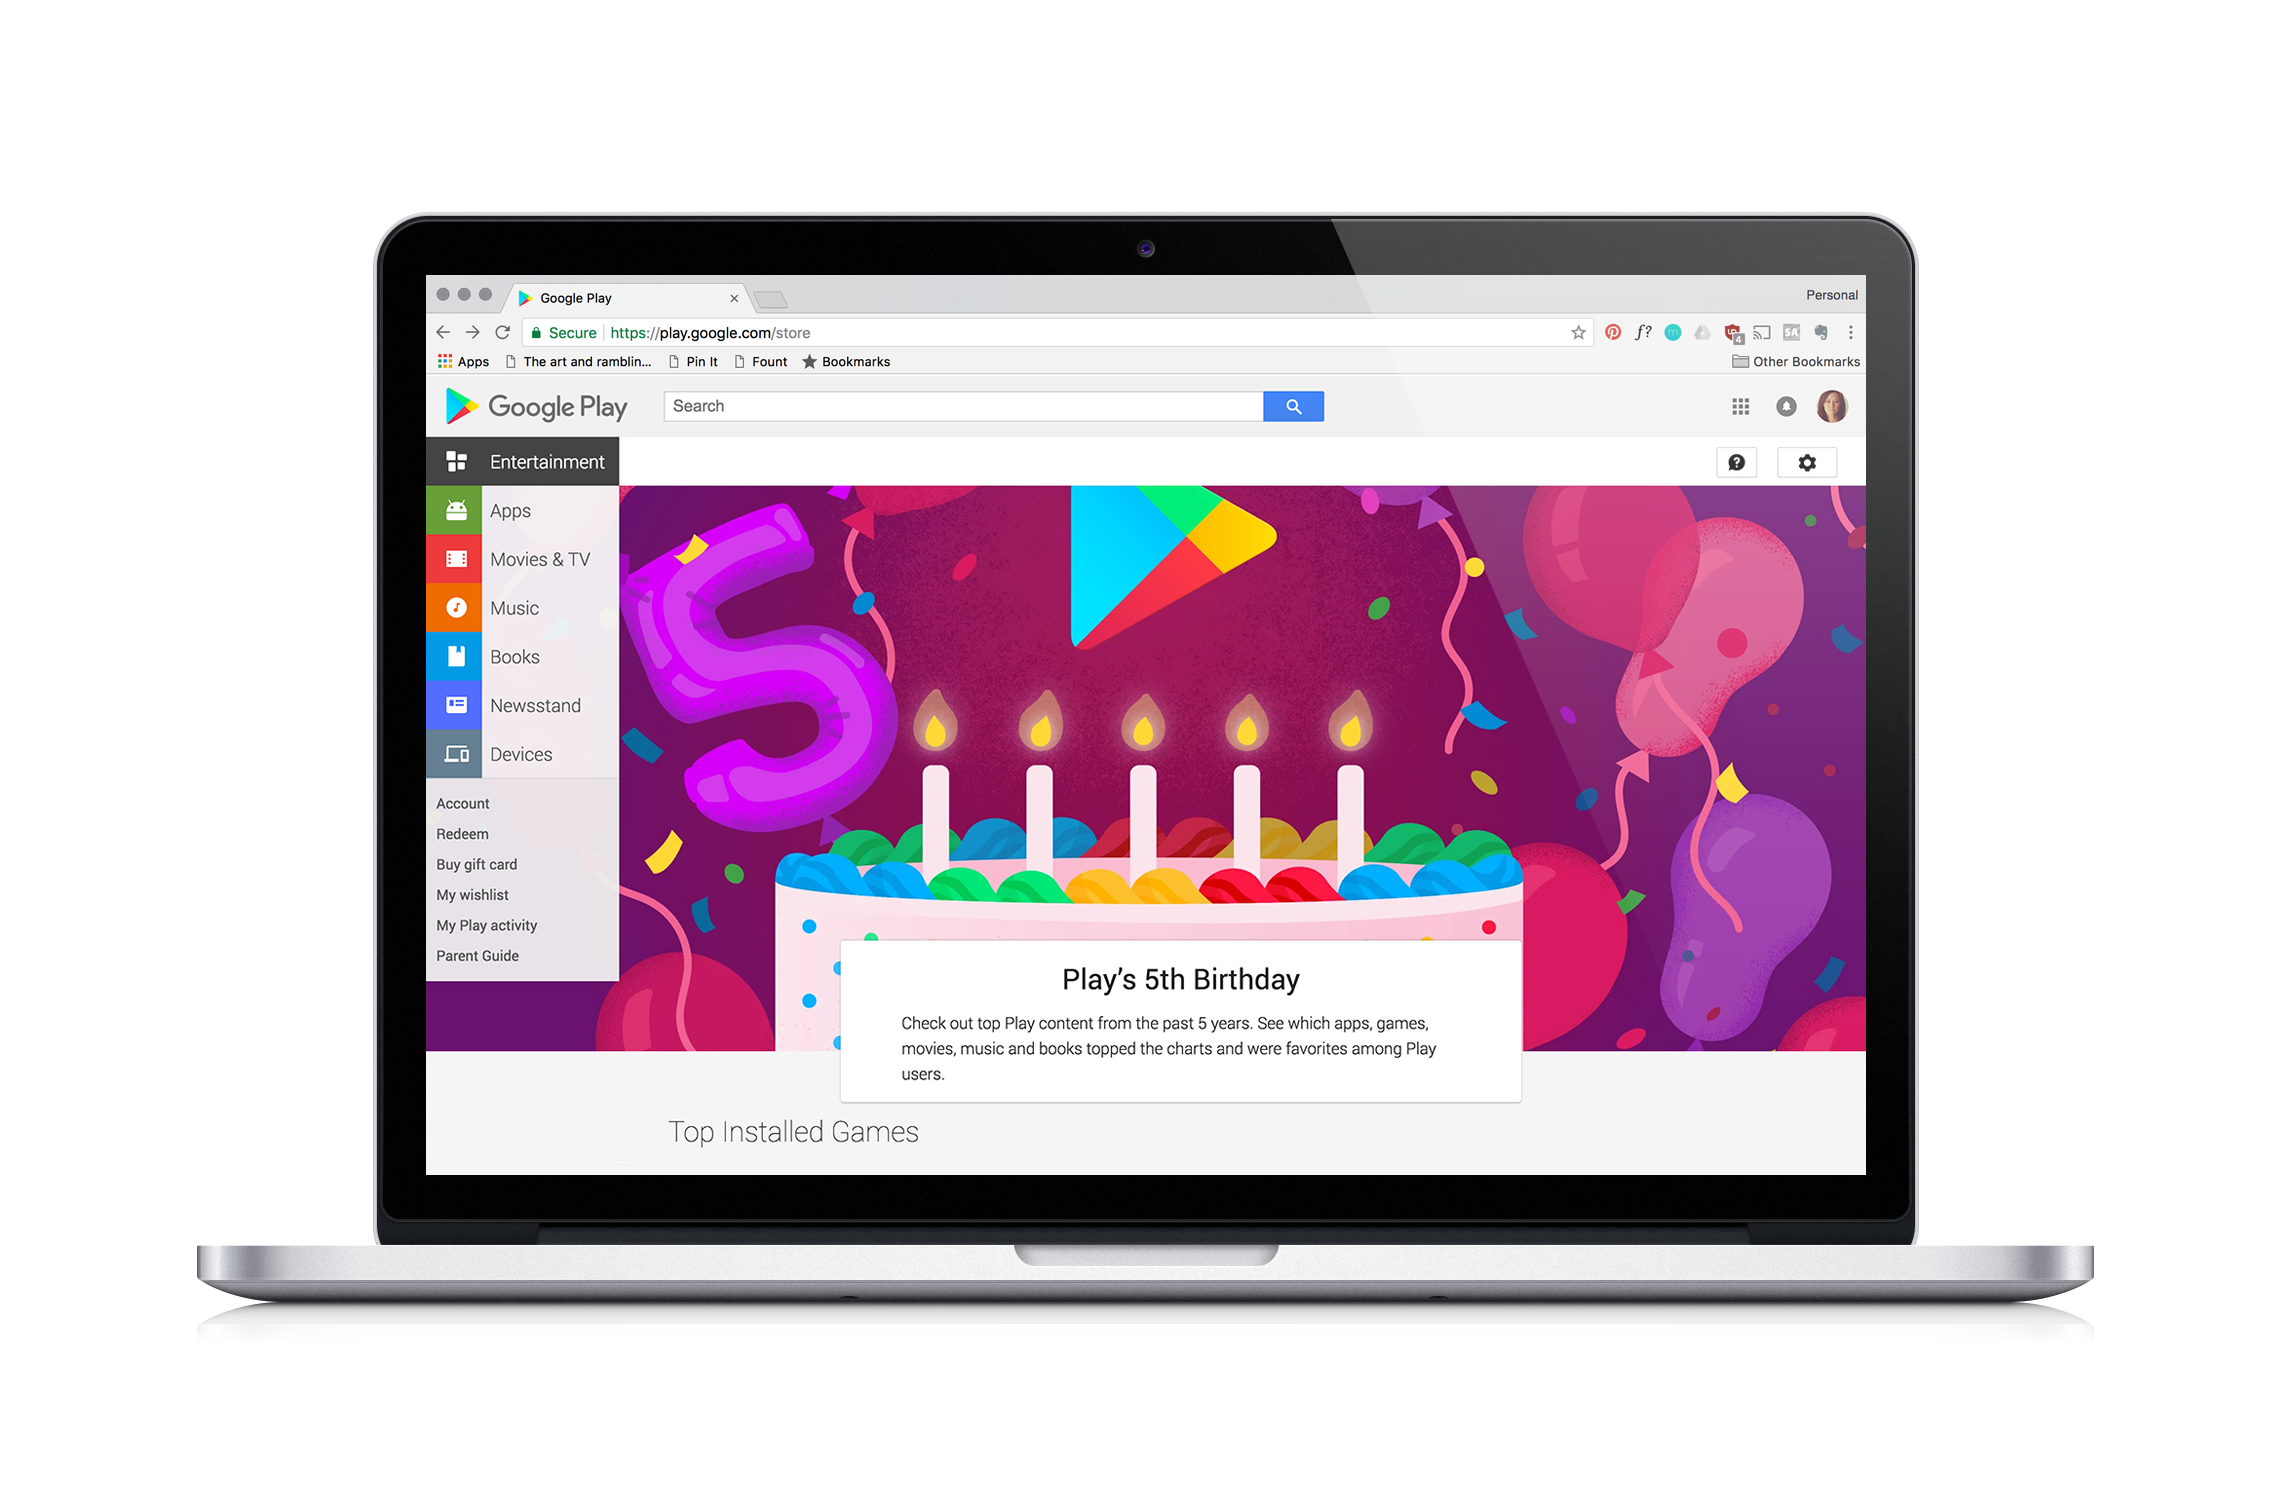 Google_play-Google_Plays_5th_birthday-mockup_02